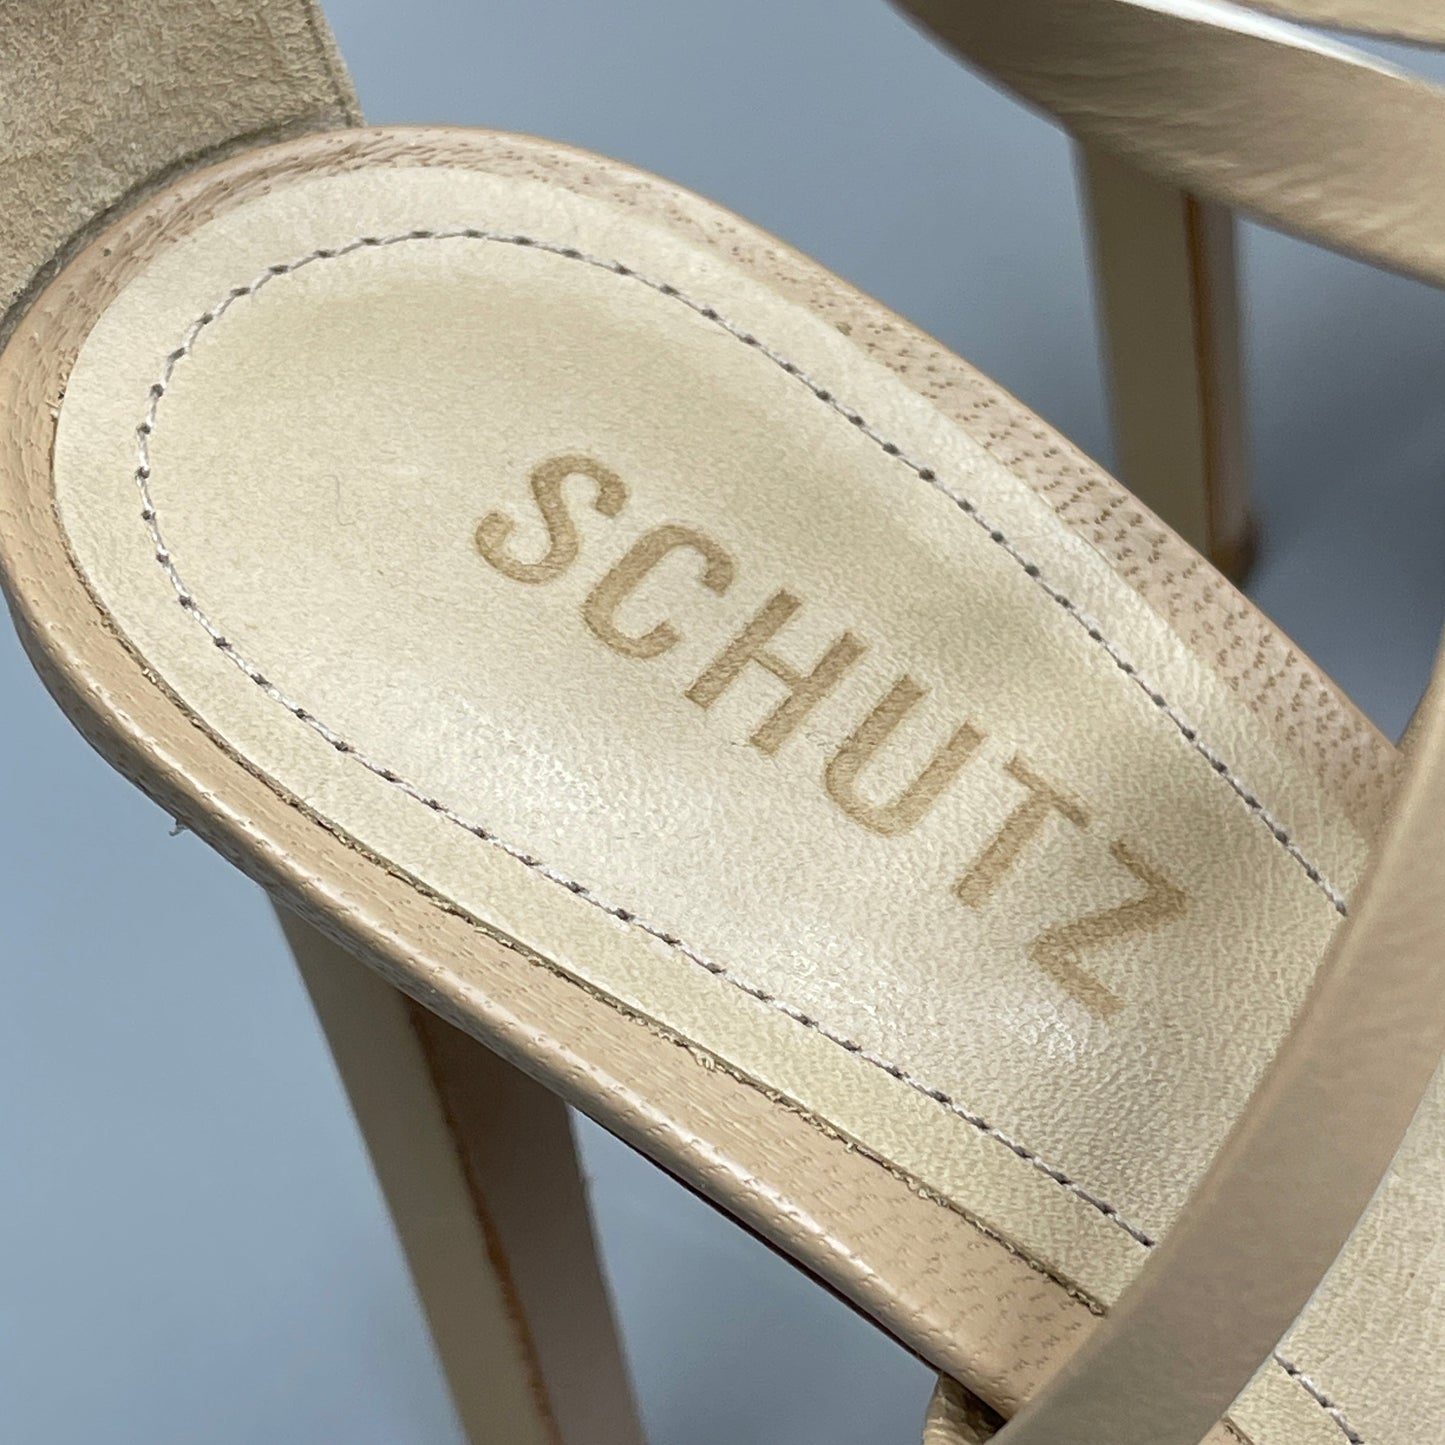 SCHUTZ Bryce Ankle Tie Women's Leather High Heel Strappy Sandal Light Nude Sz 7B (New)